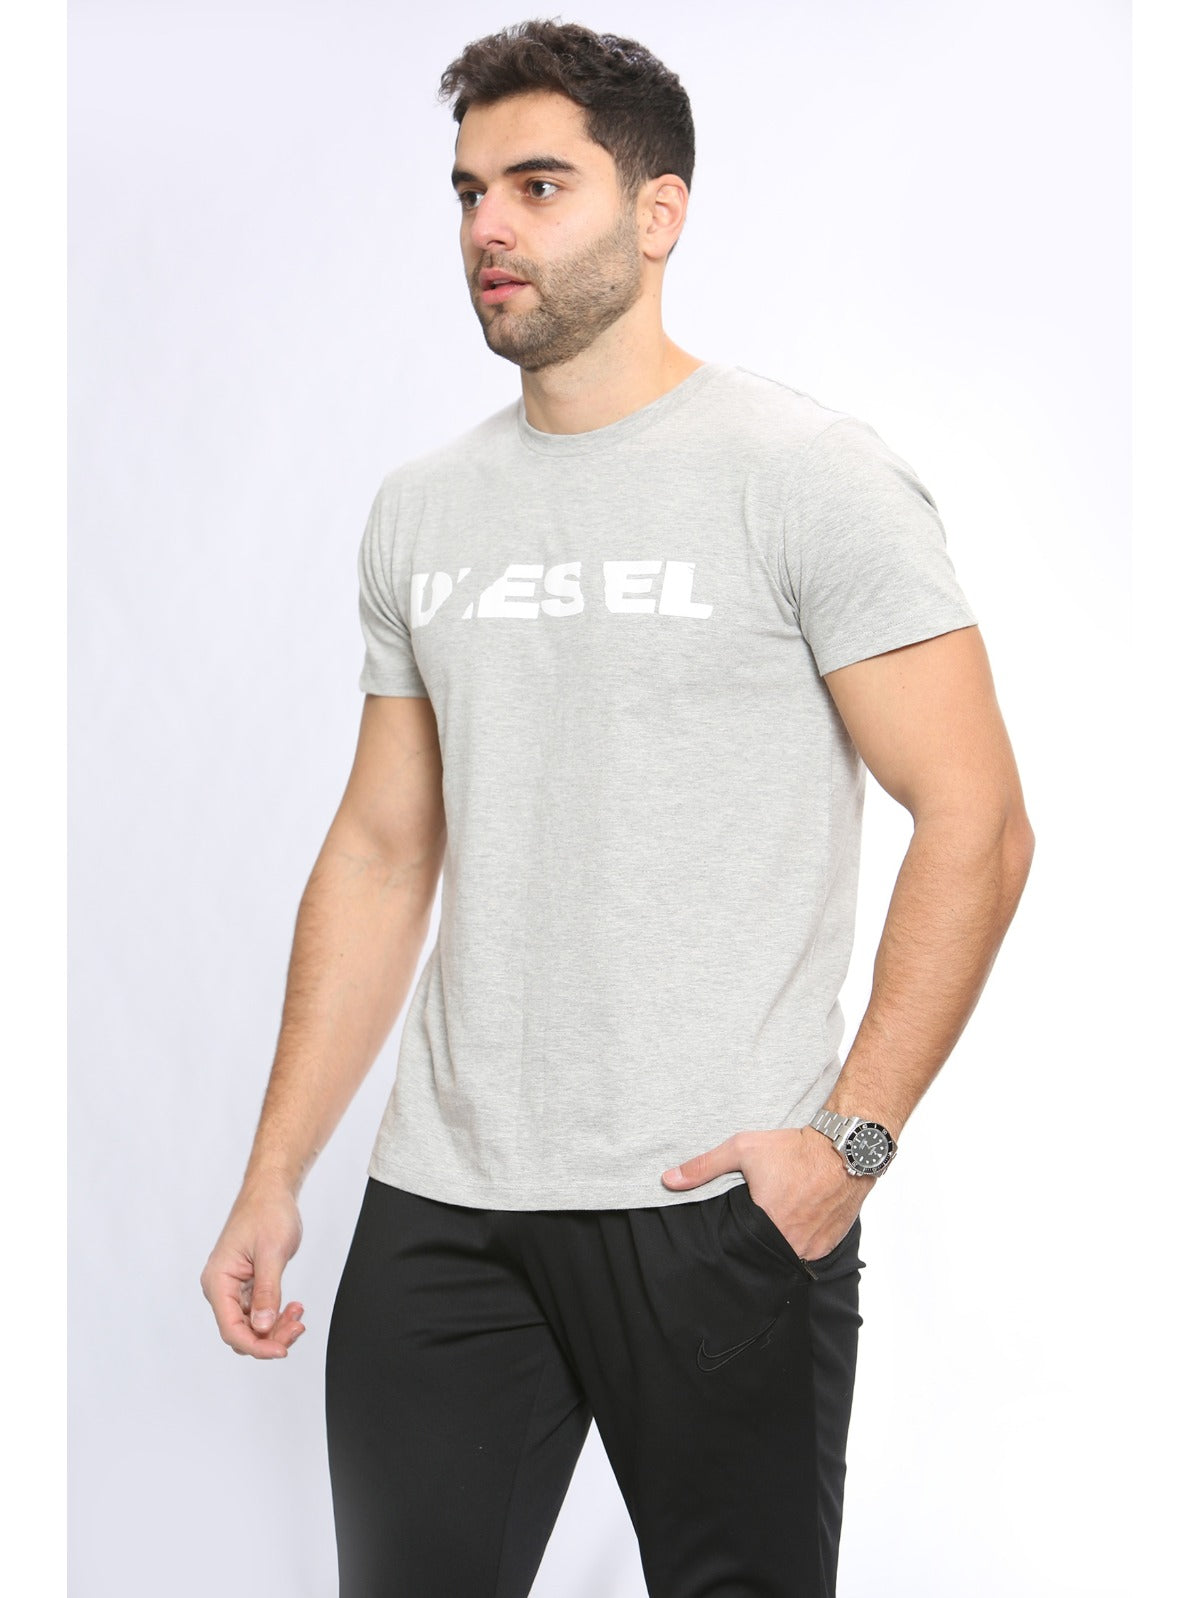 Diesel Mens Short Sleeve Casual T Shirt | T-Diego